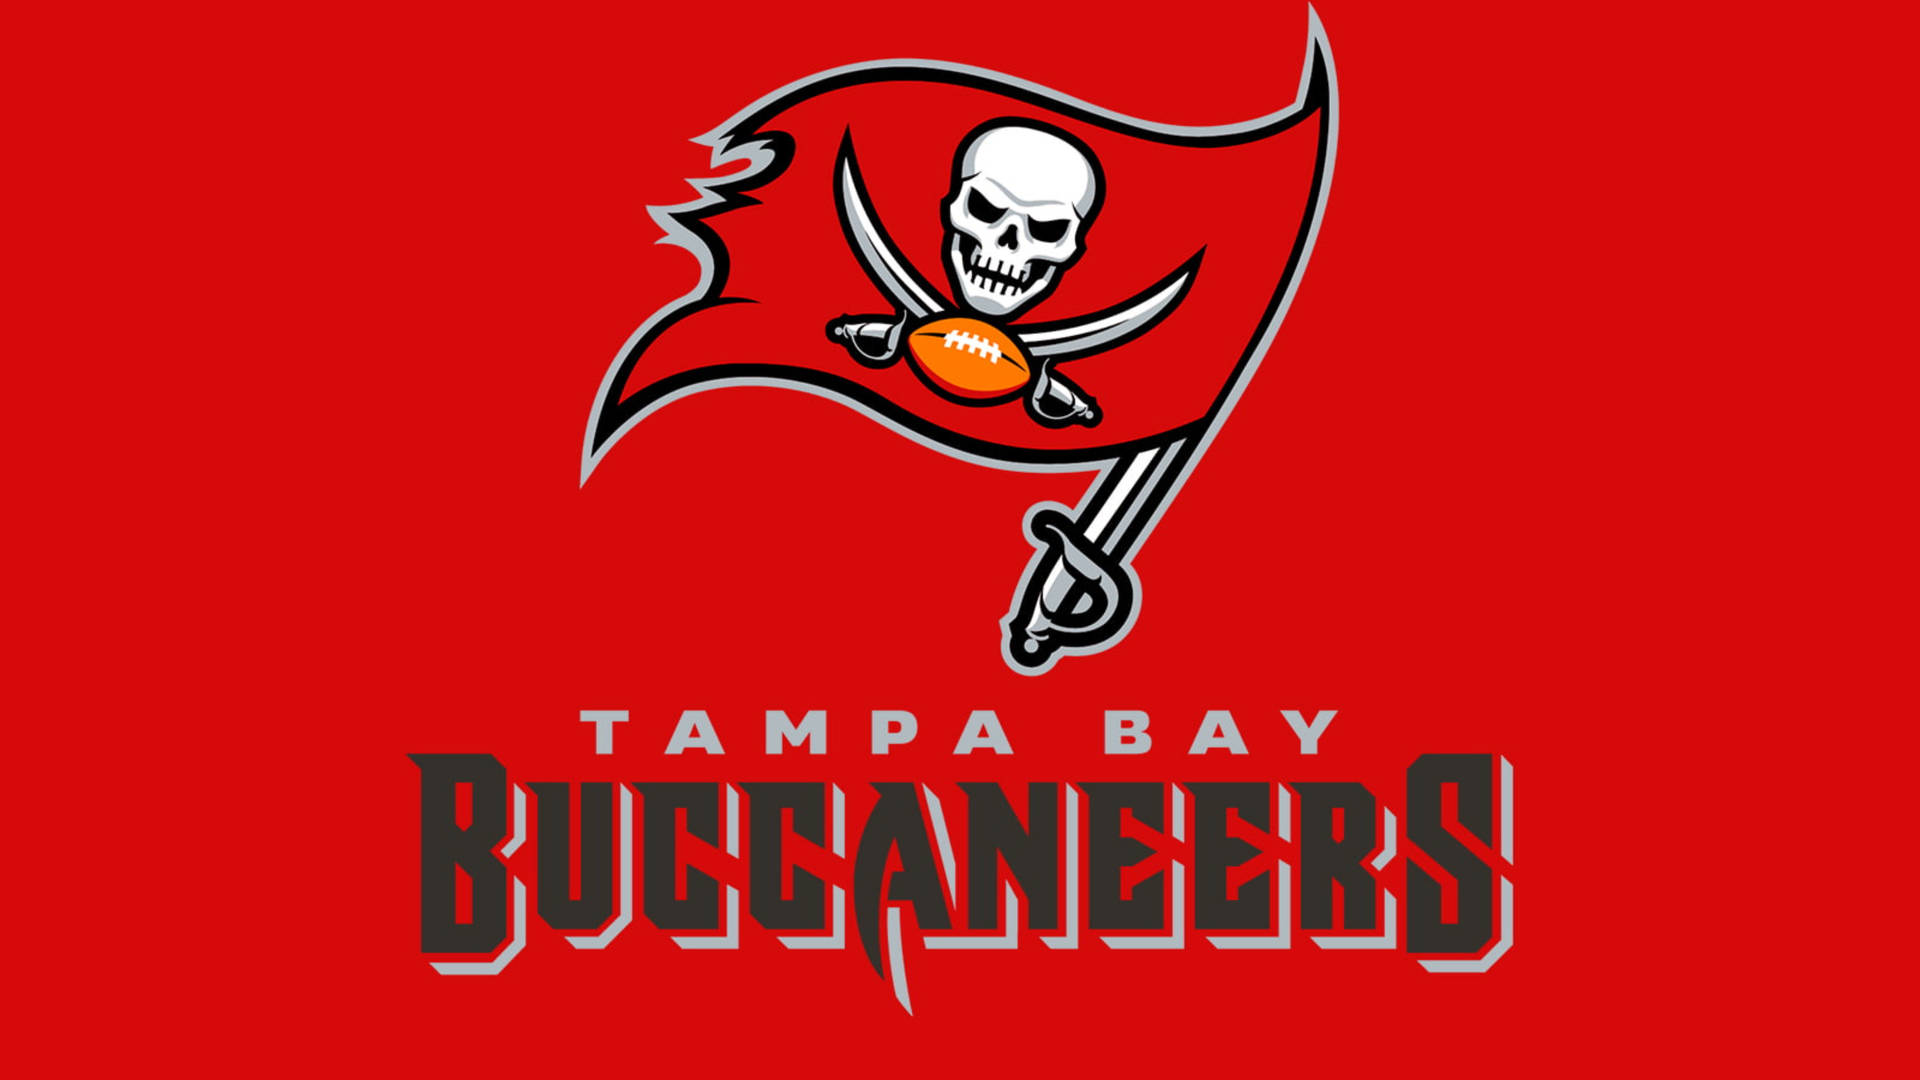 Tampa Bay Buccaneers Name And Logo Wallpaper